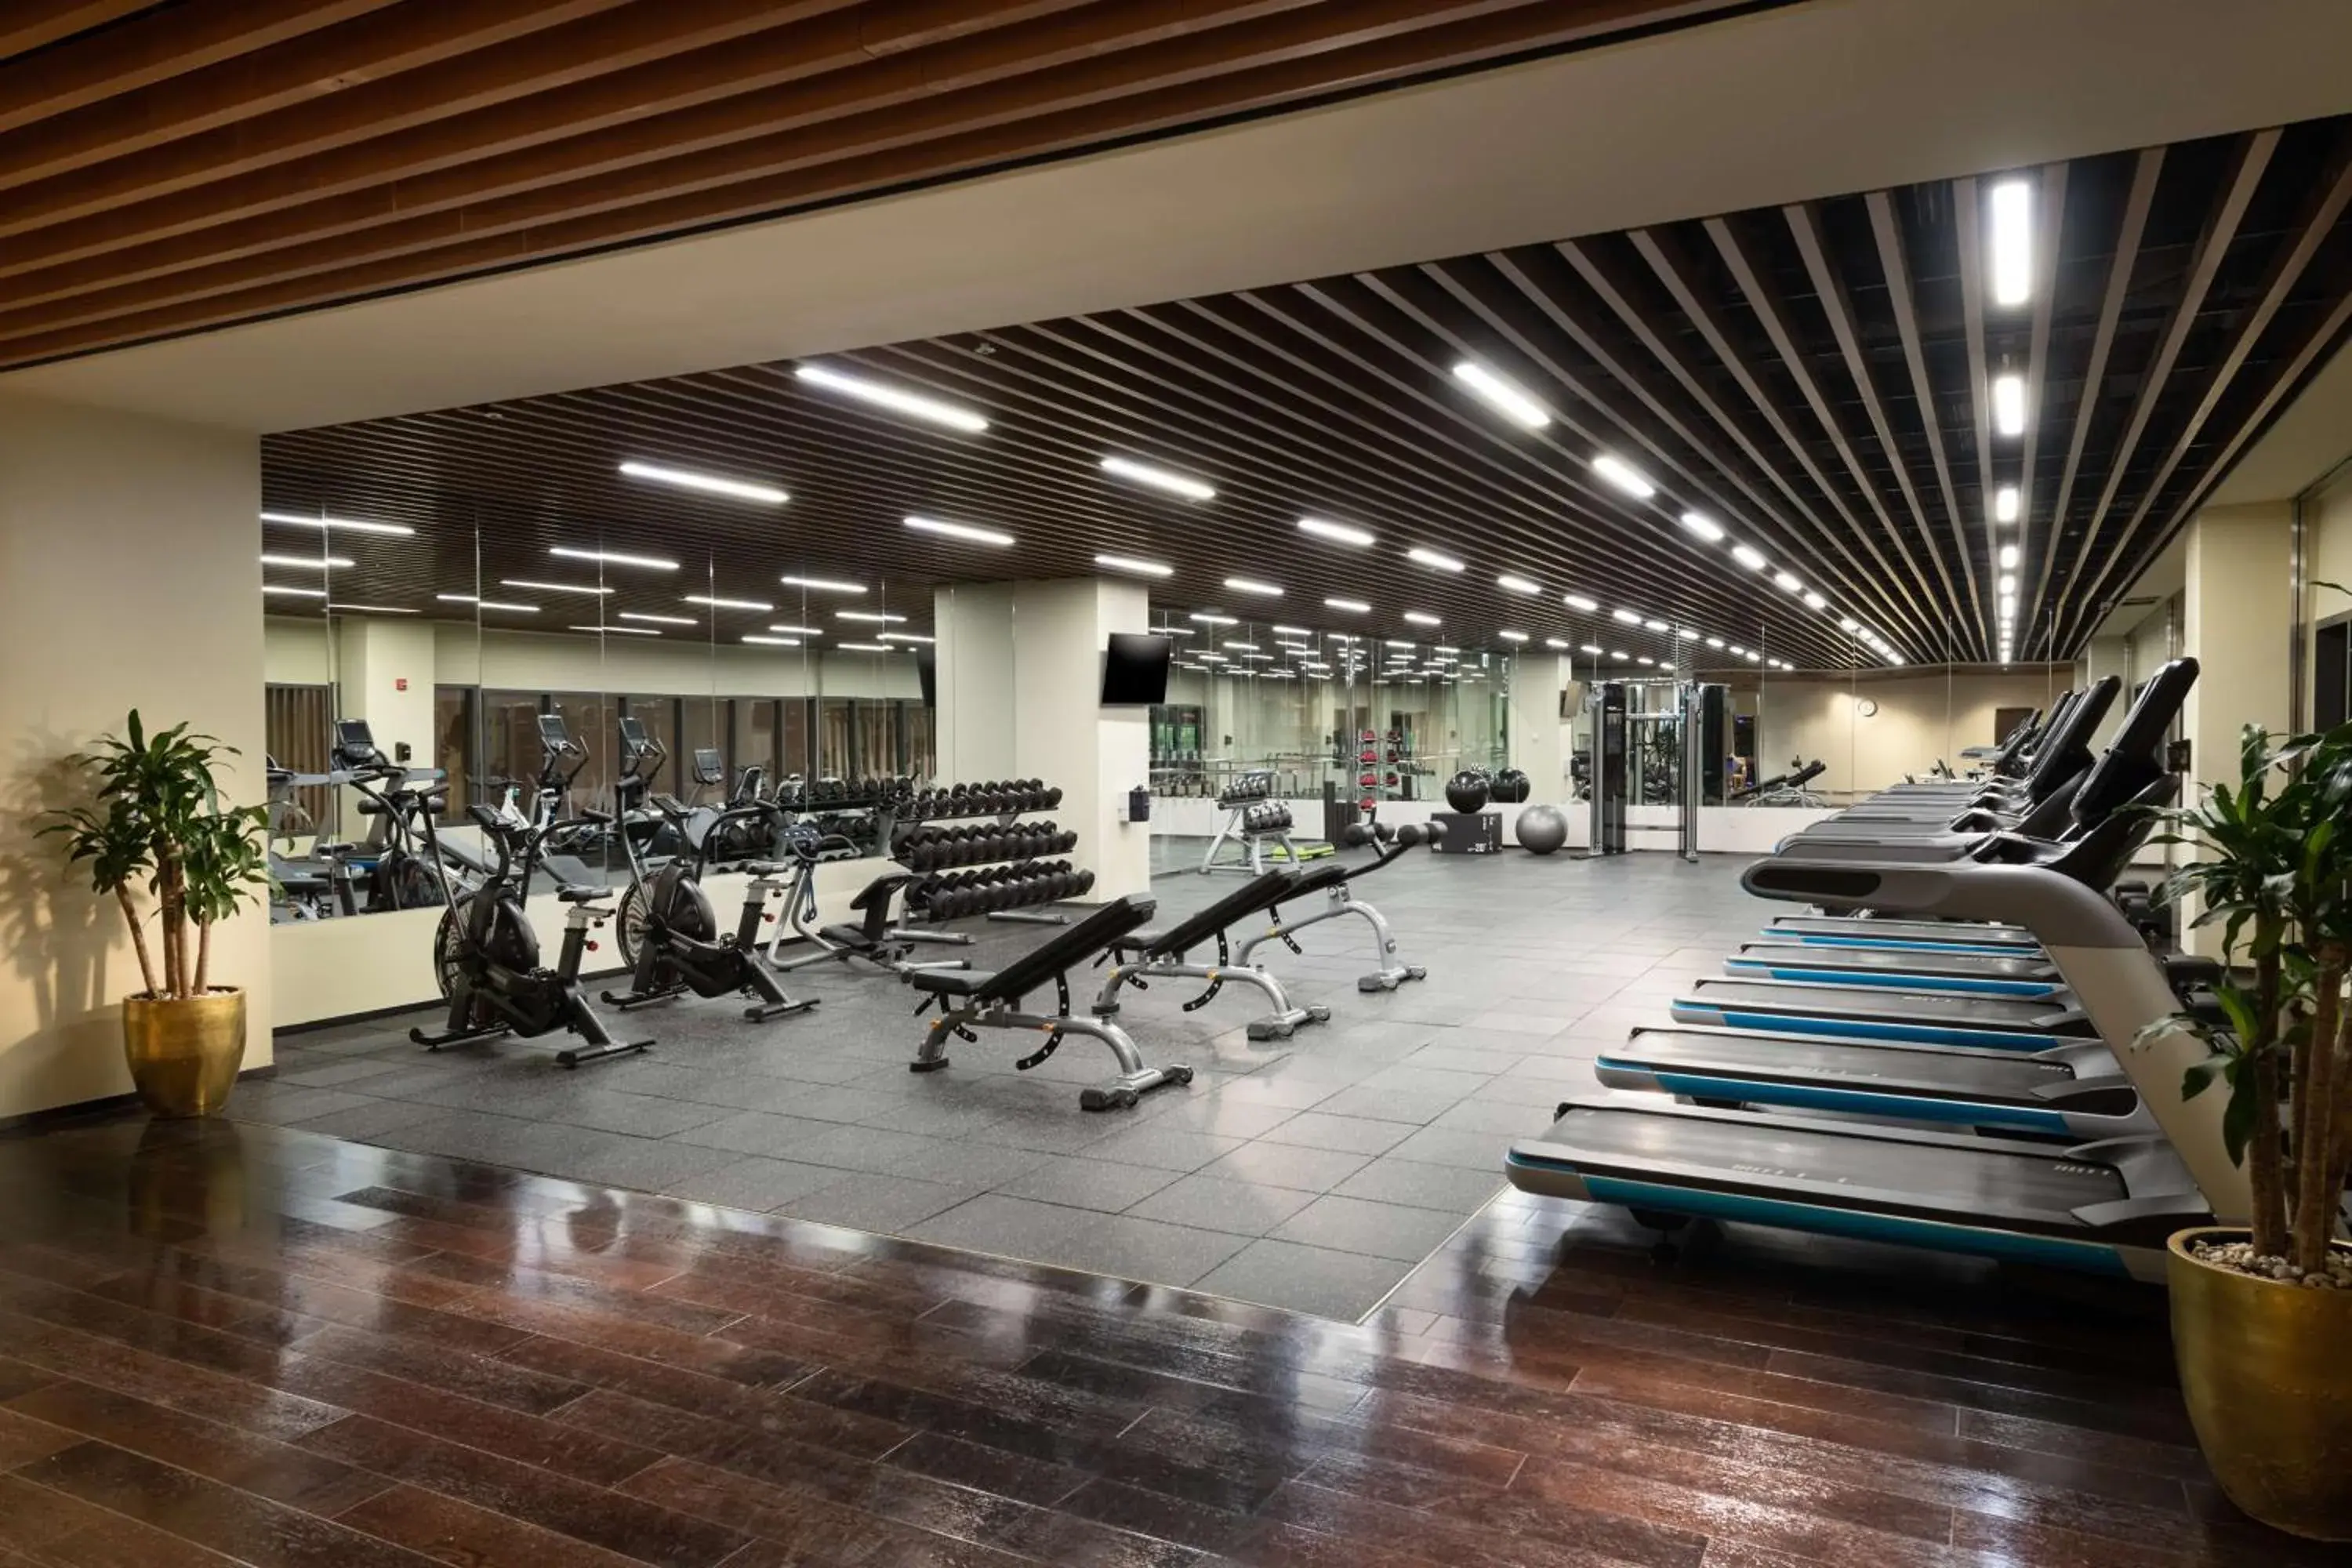 Fitness centre/facilities, Fitness Center/Facilities in Hilton Clark Sun Valley Resort